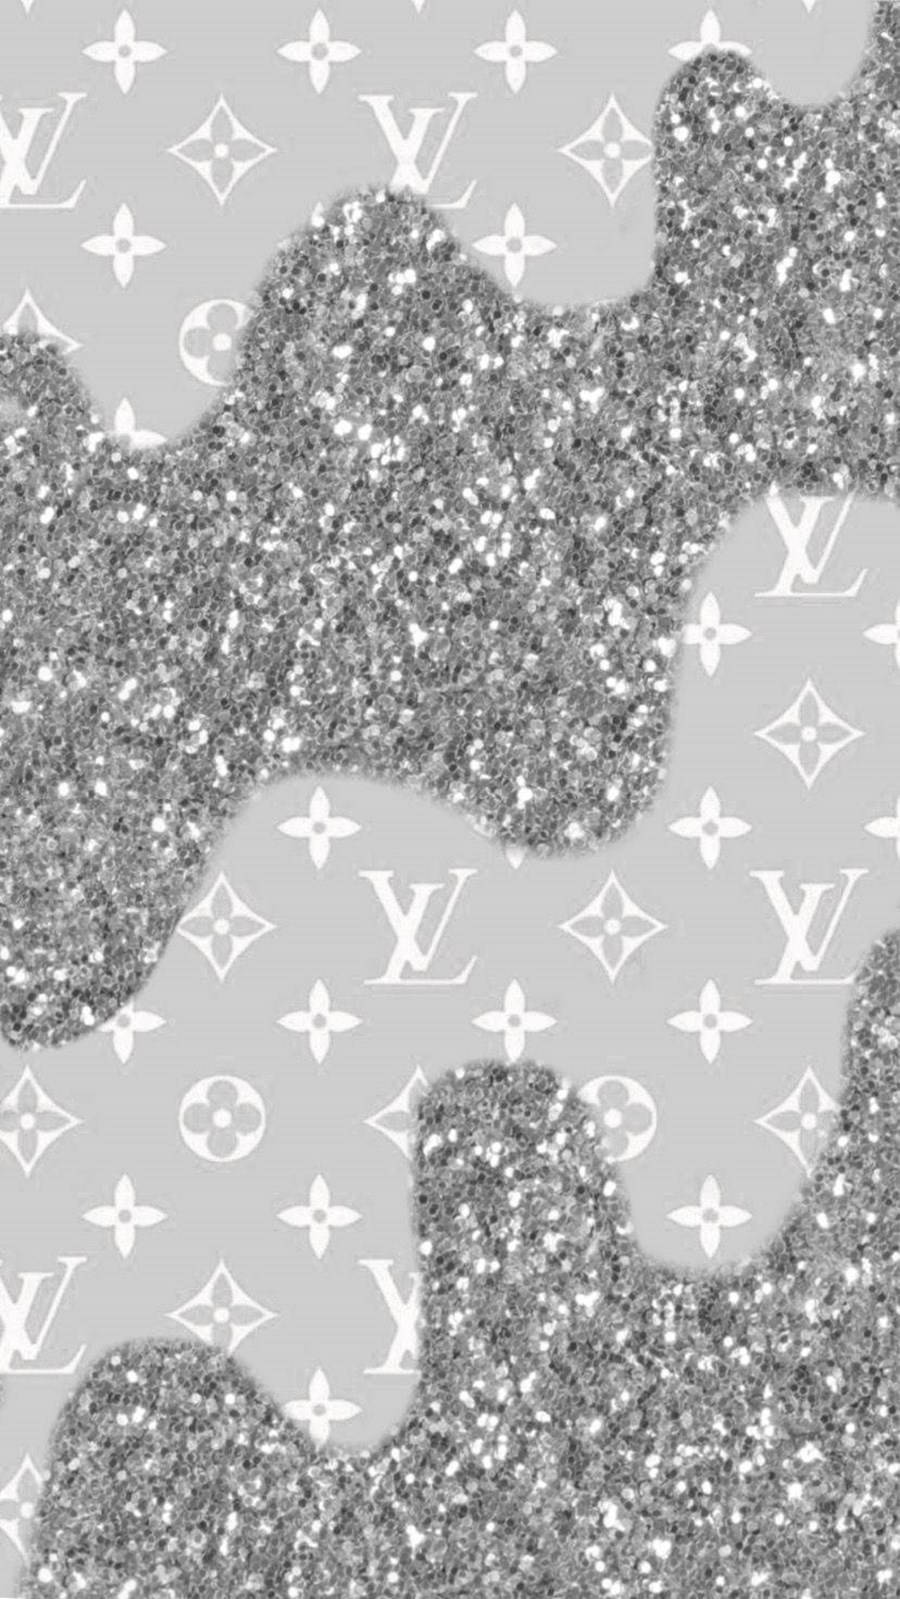 A glittery louis vuitton pattern on grey background - Silver, Louis Vuitton, bling